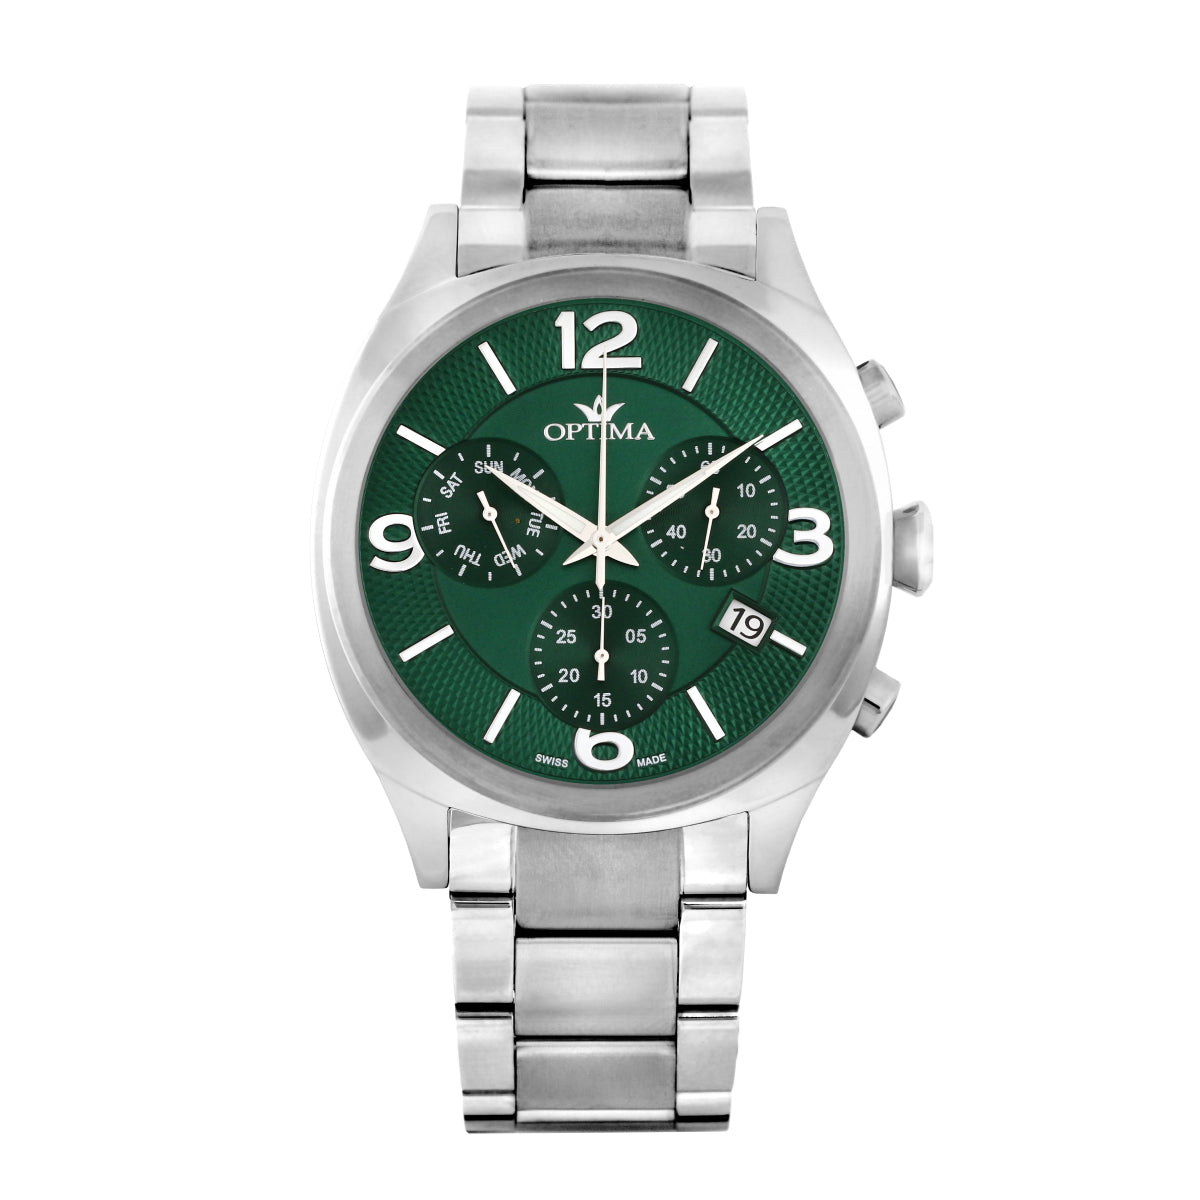 Optima Men's Swiss Quartz Watch with Green Dial - OPT-0002